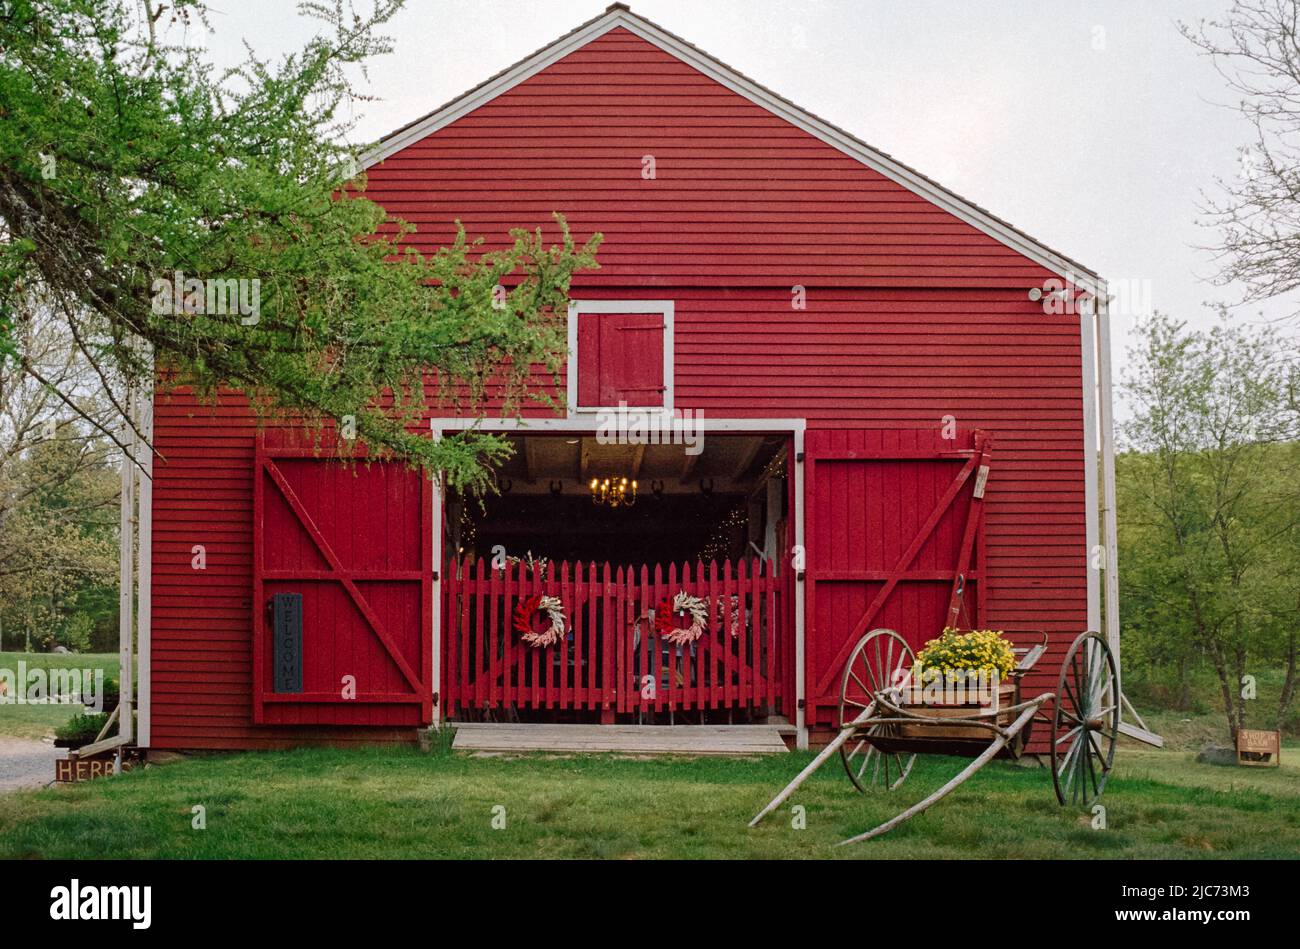 The Old Barn on an overcast day at the historic Wayside Inn. Image was captured on analog film. Sudbury, Massachusetts USA. Stock Photo